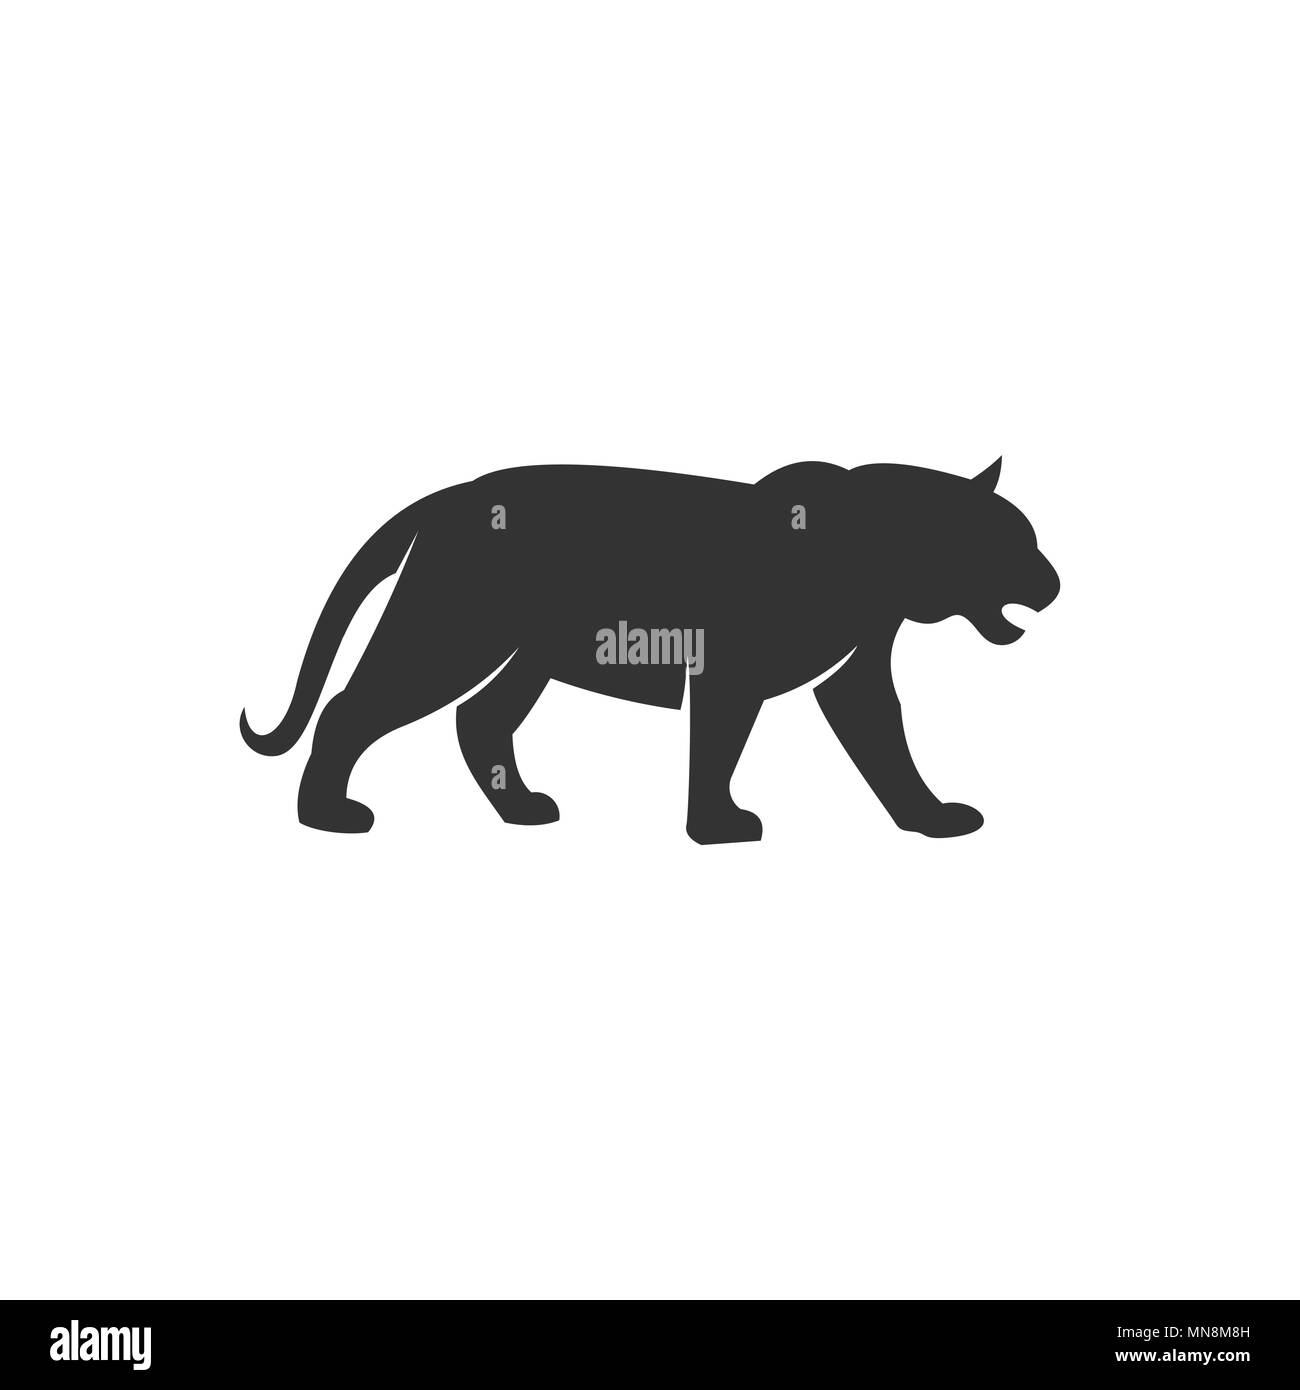 Tiger silhouette logo, vector illustrations. Stock Vector